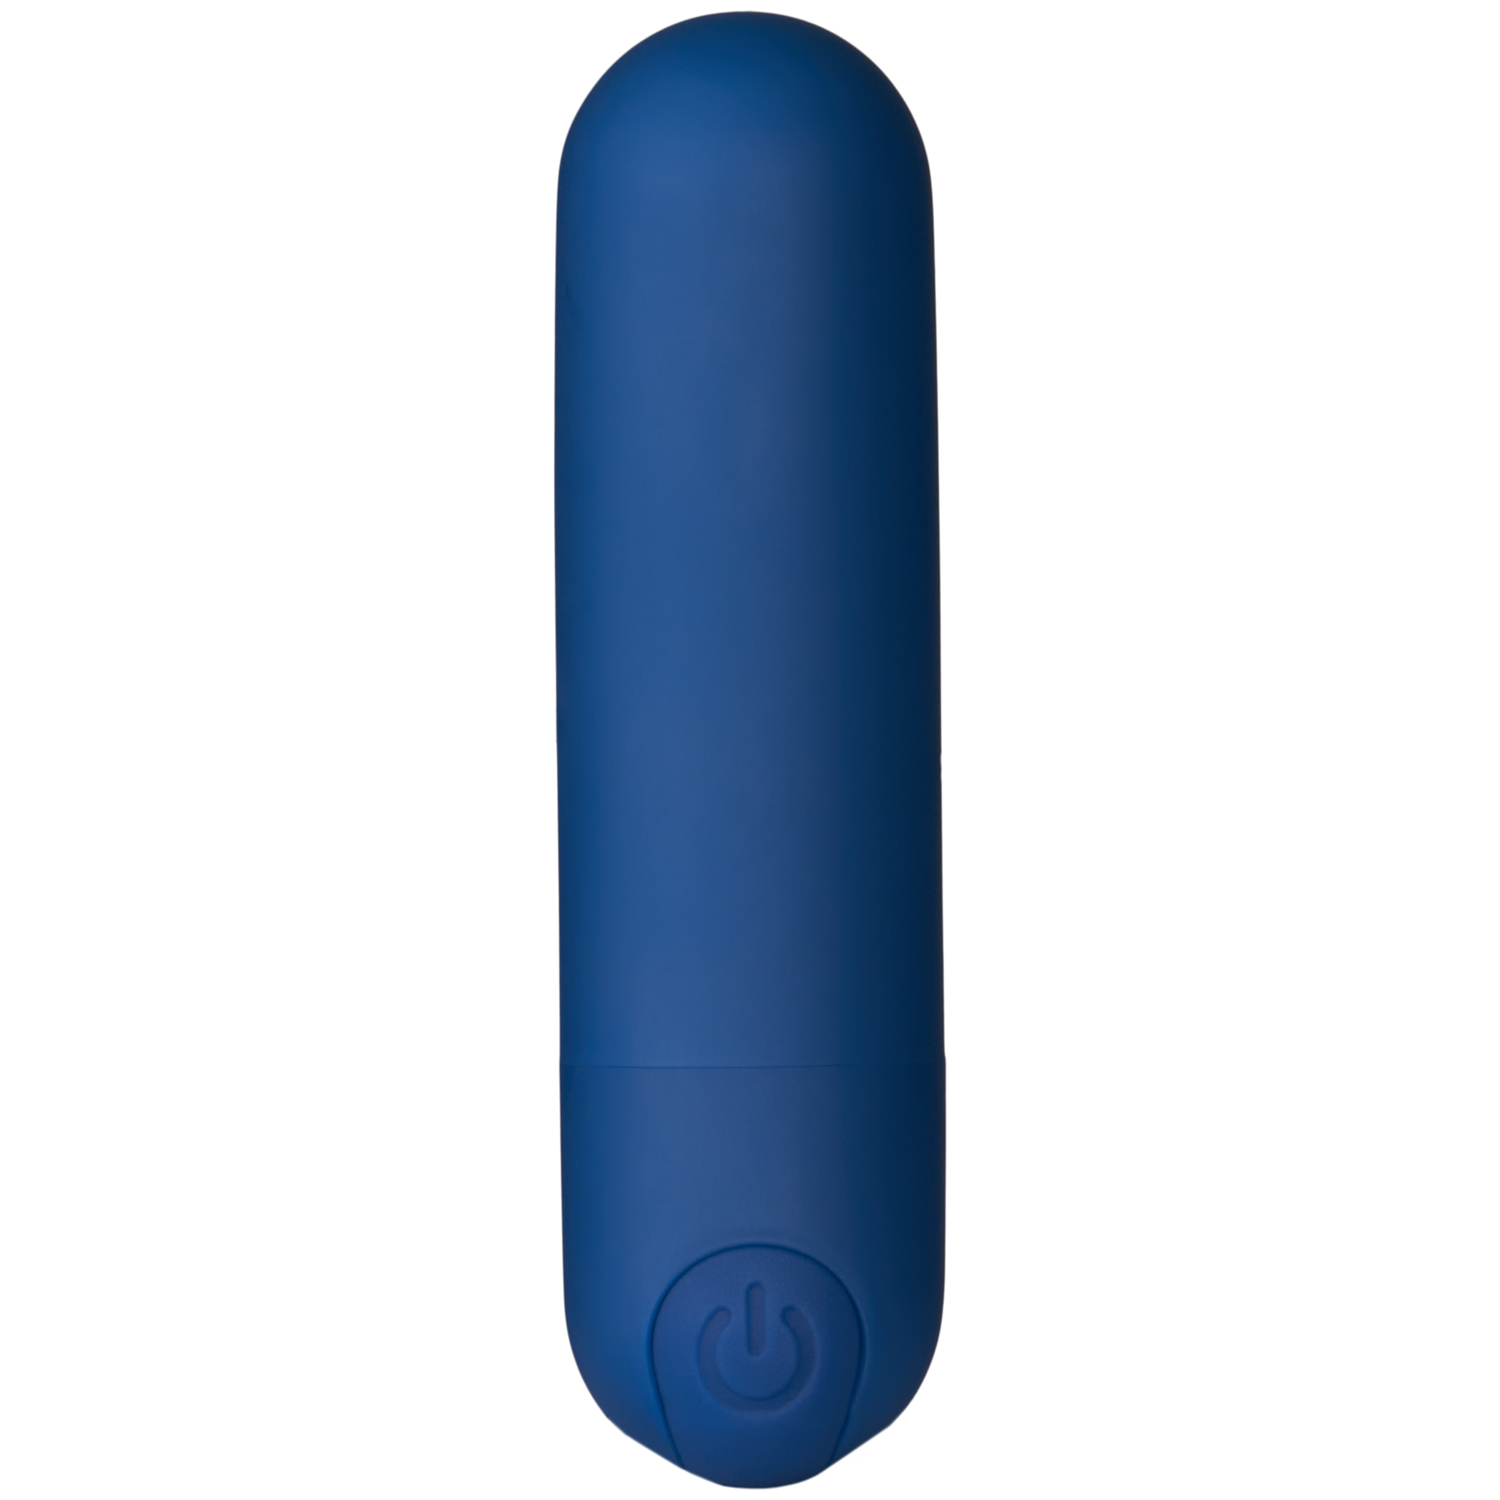 Sinful Business Blue Opladelig Power Bullet Vibrator - Blue thumbnail